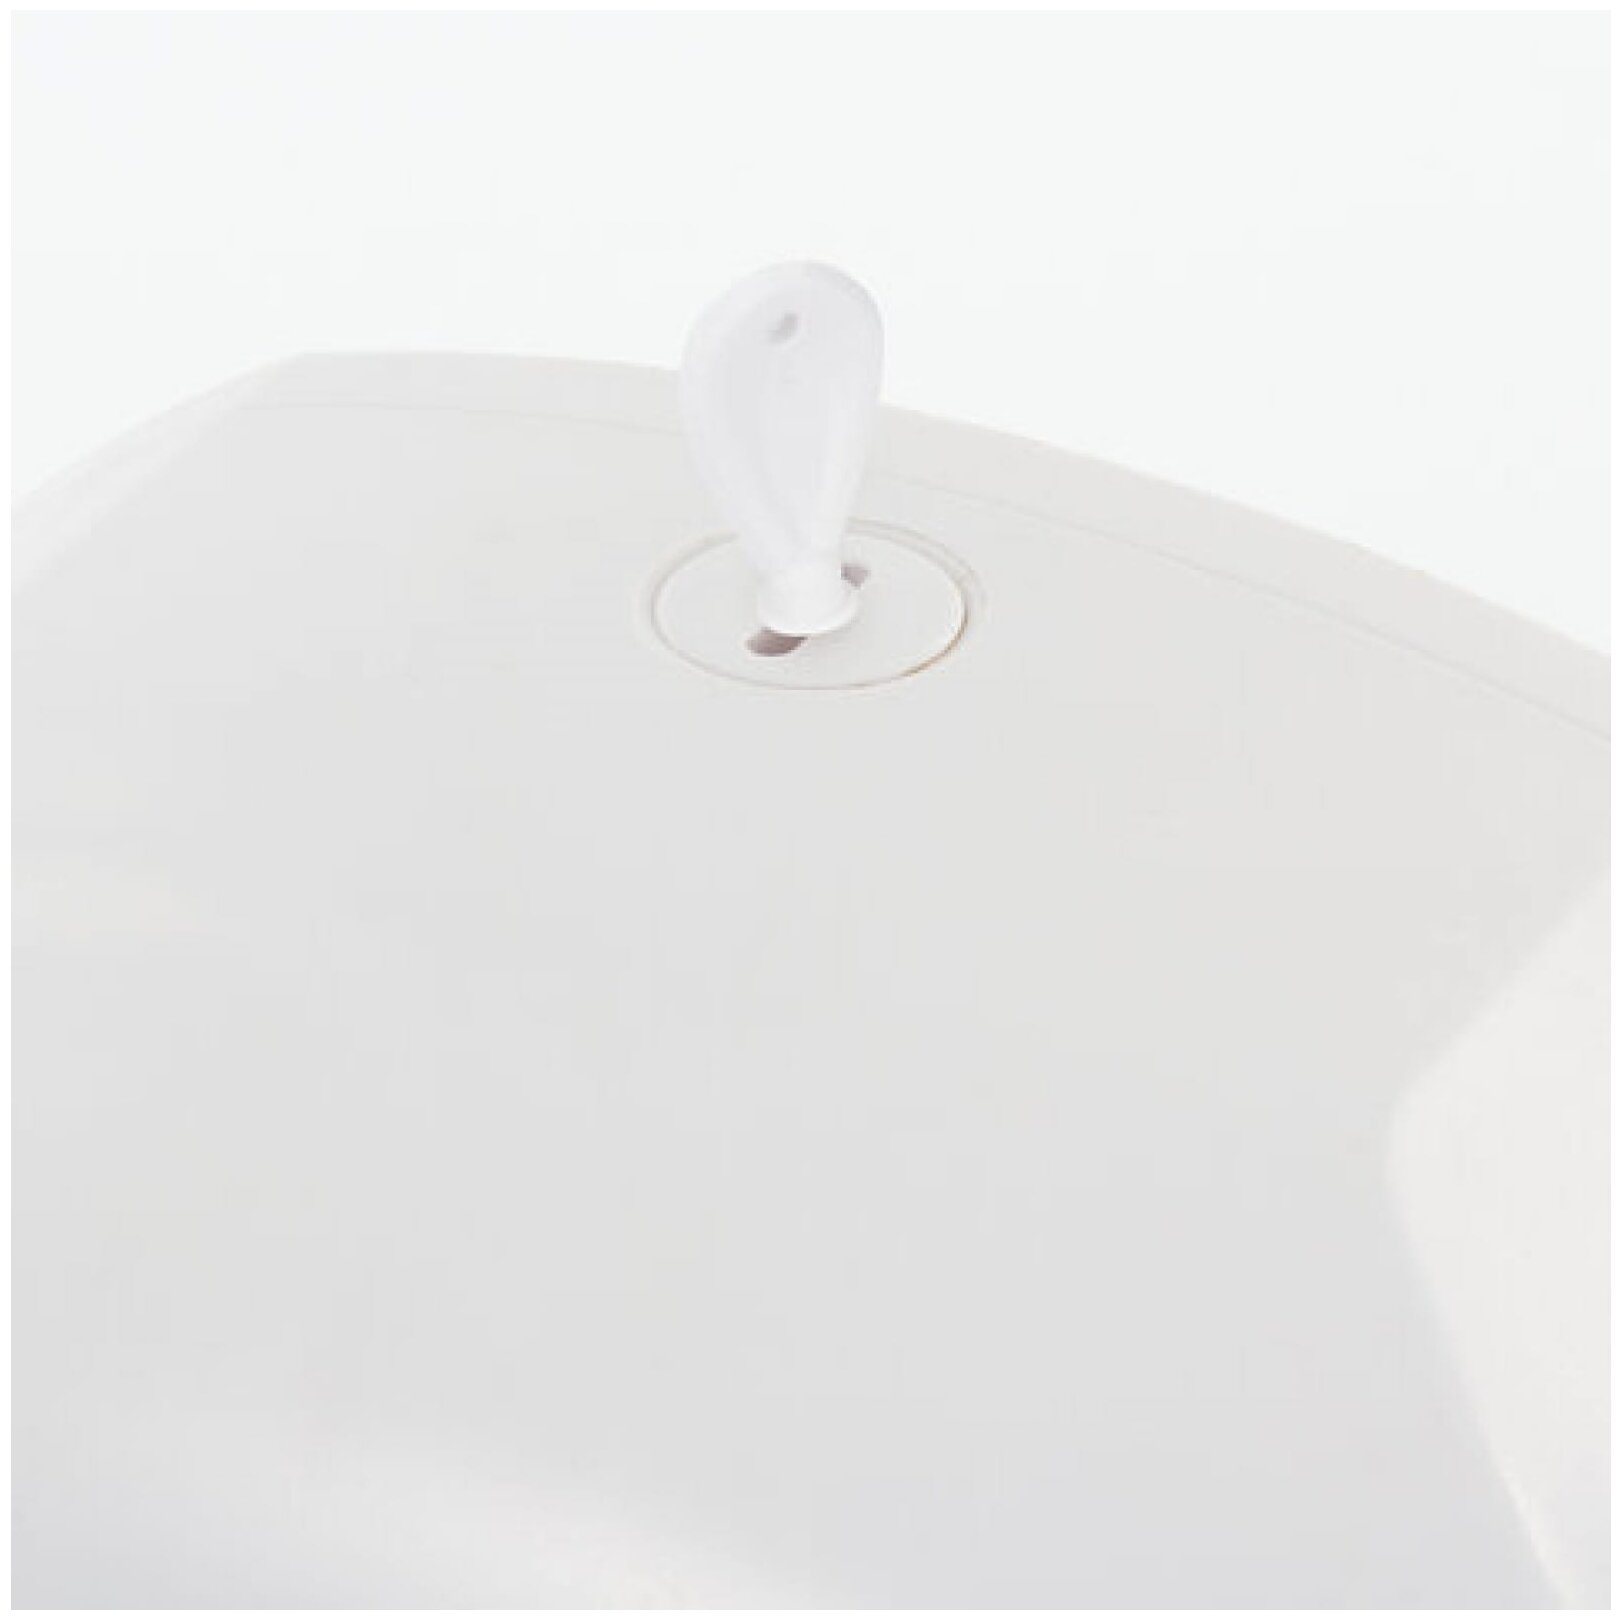 Диспенсер для туалетной бумаги Лайма Laima Professional Economy (Система T2), малый, белый, ABS-пластик